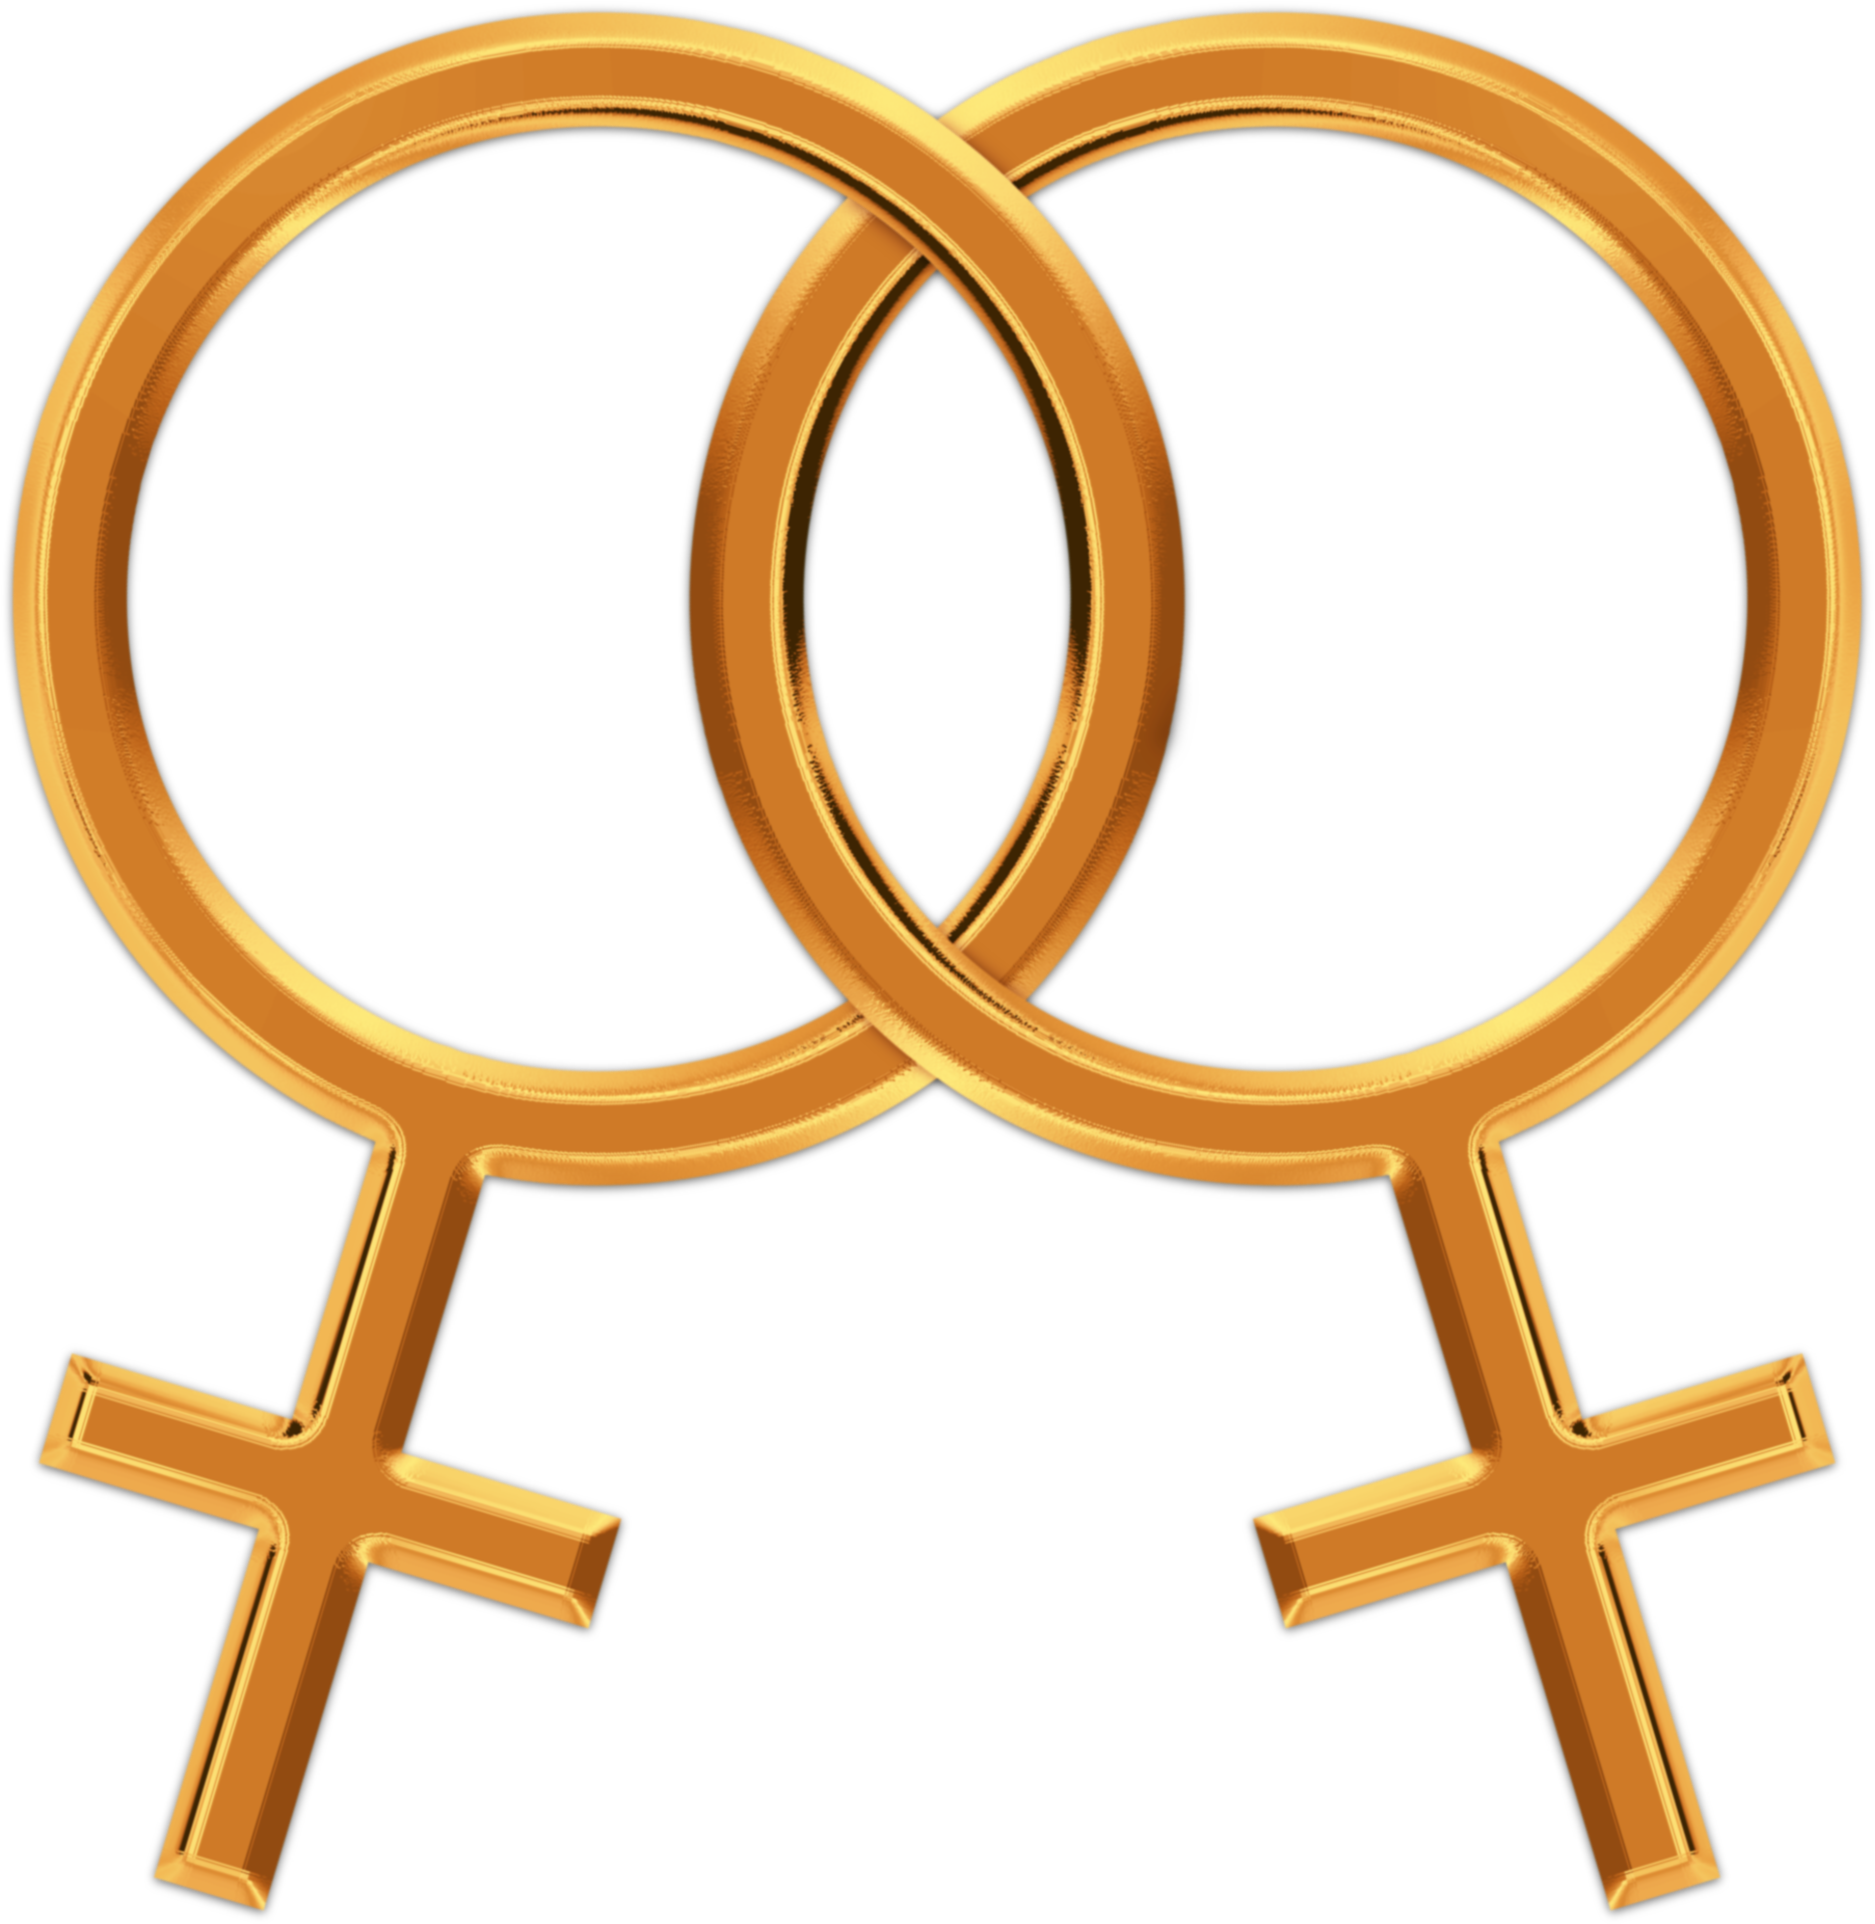 A Couple Of Gold Female Symbols